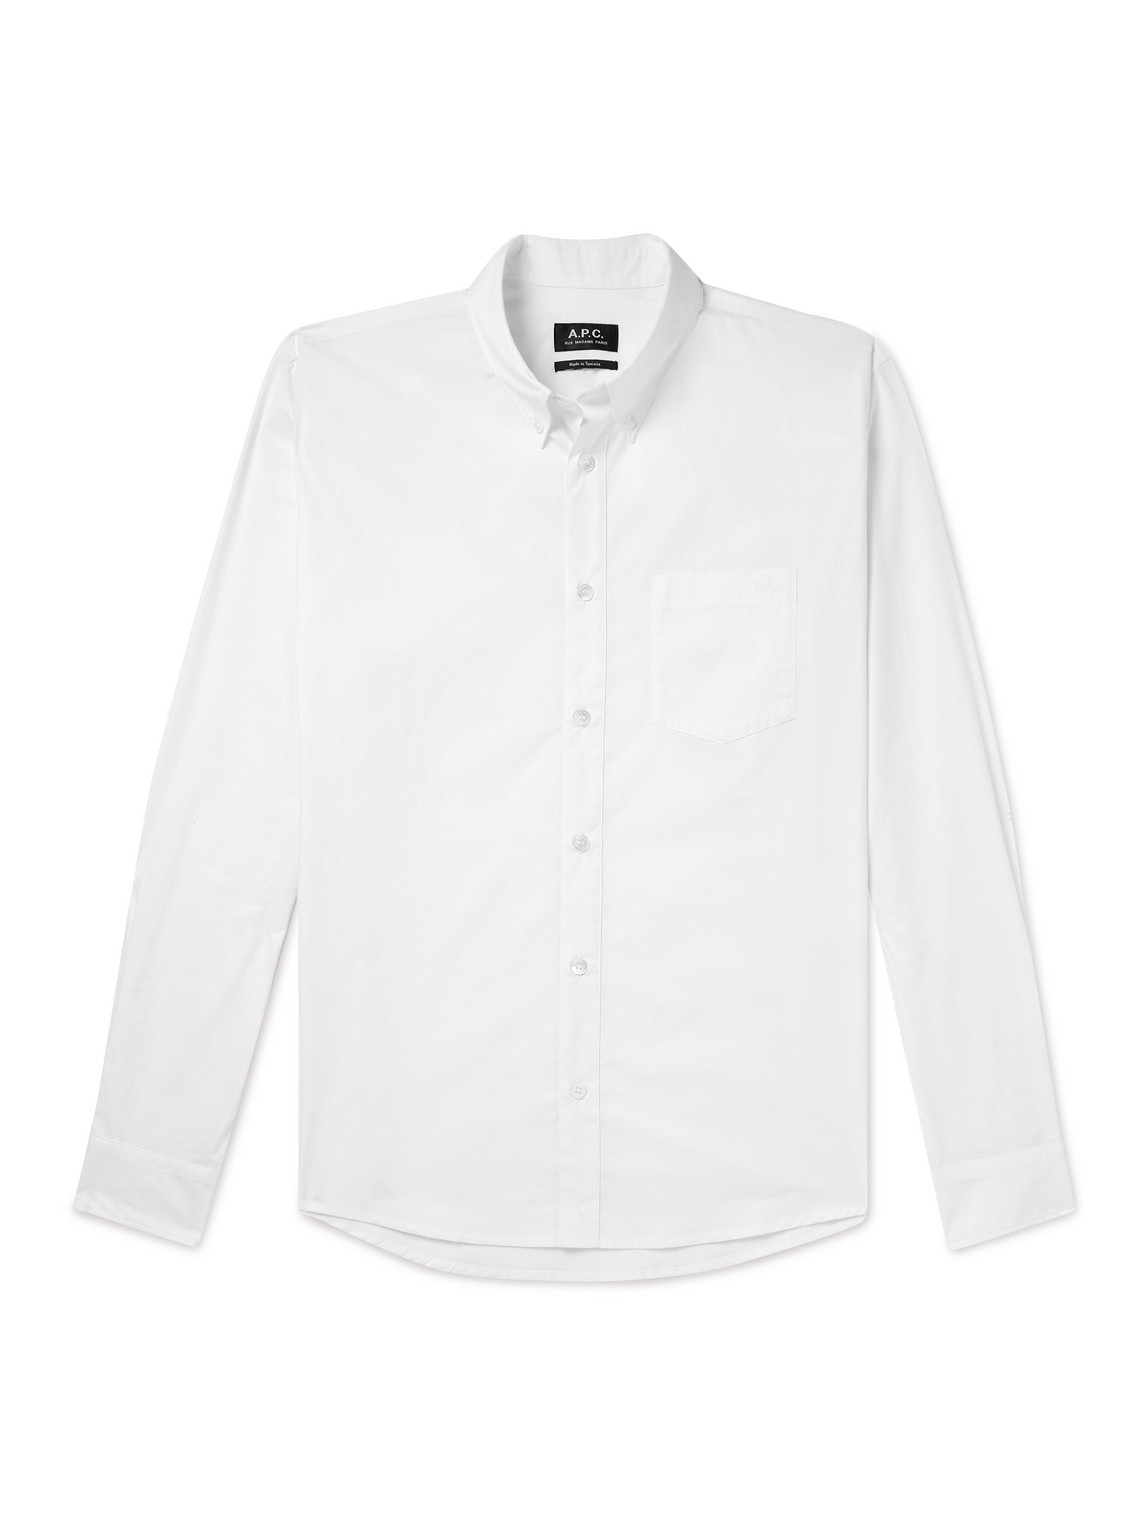 A.P.C. - Edouard Button-Down Collar Cotton Shirt - Men - White - XL von A.P.C.